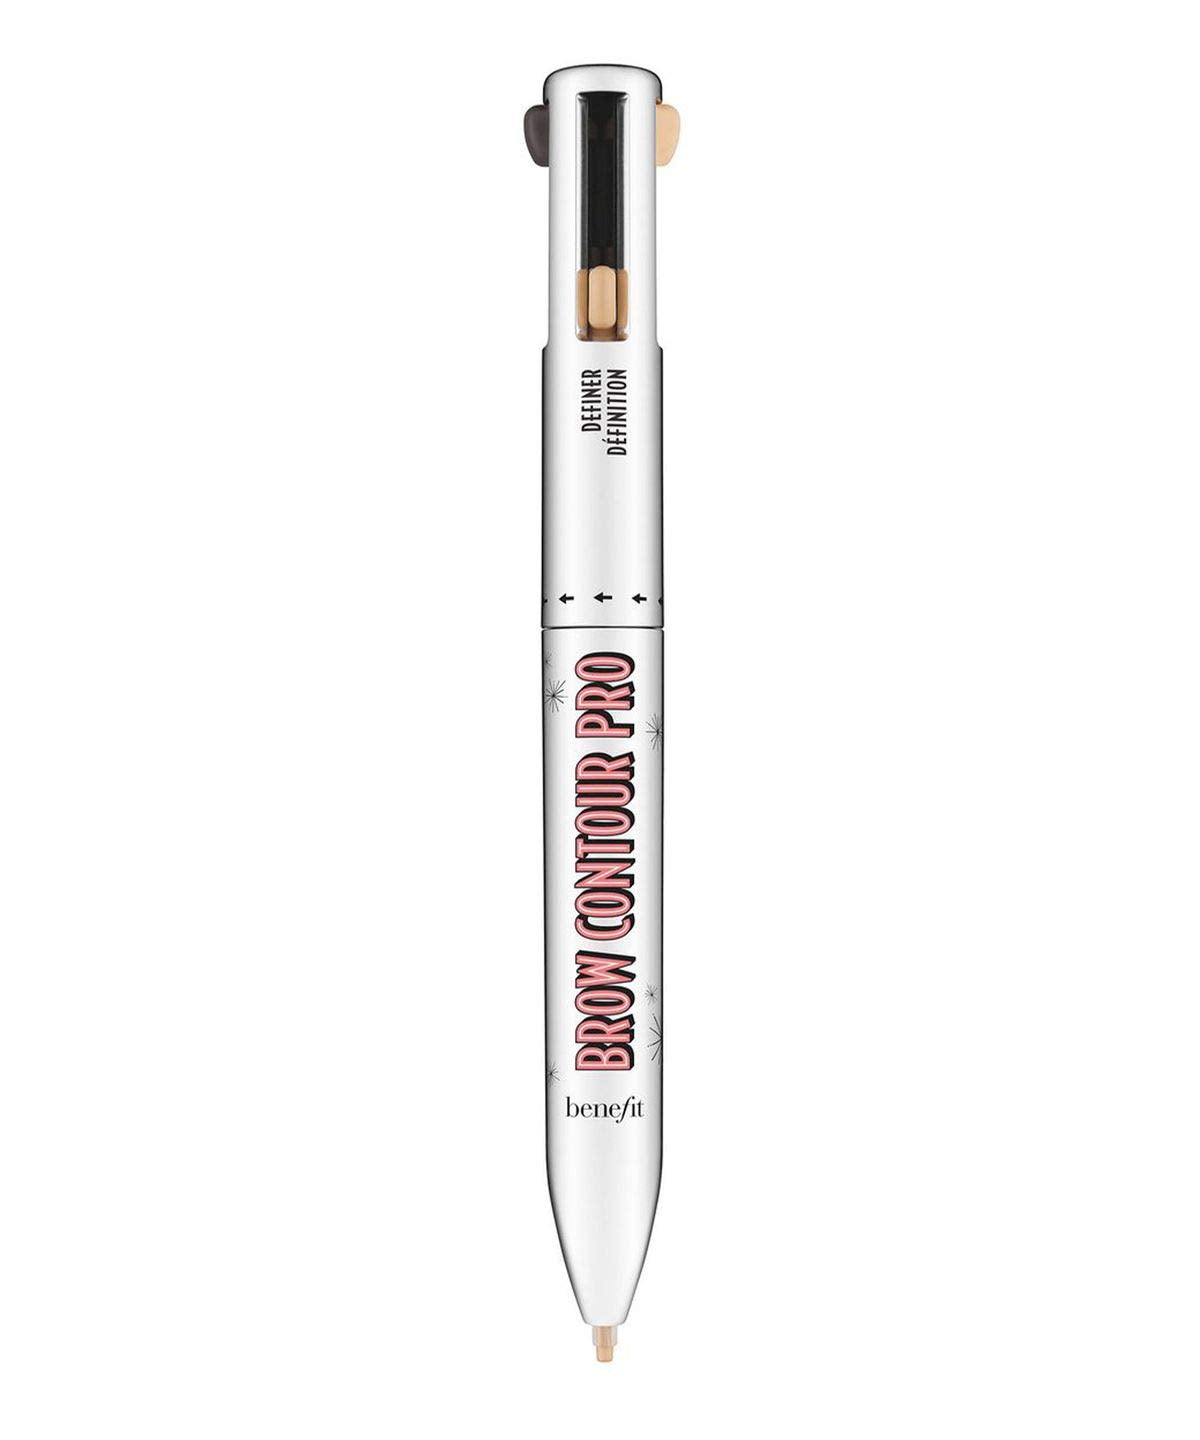 Benefit Cosmetics Brow Contour Pro 4-in-1 Defining & Highlighting Brow Pencil - Medium Brown